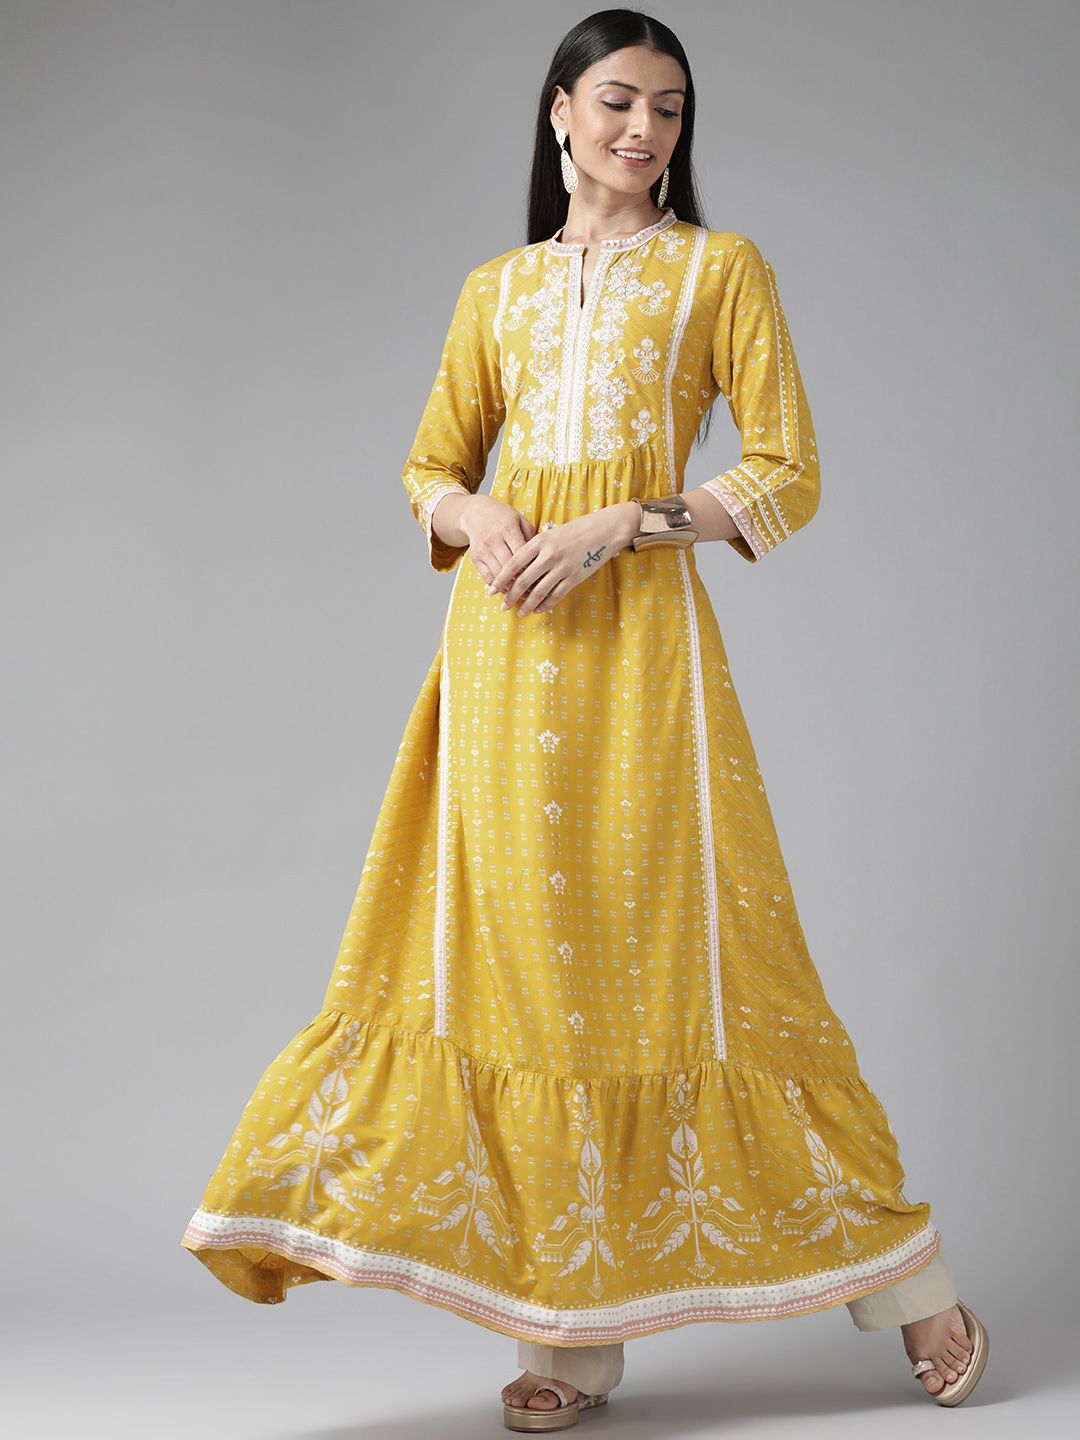 W Women Mustard Yellow & White Ethnic Printed Maxi Ethnic Dress Price in India